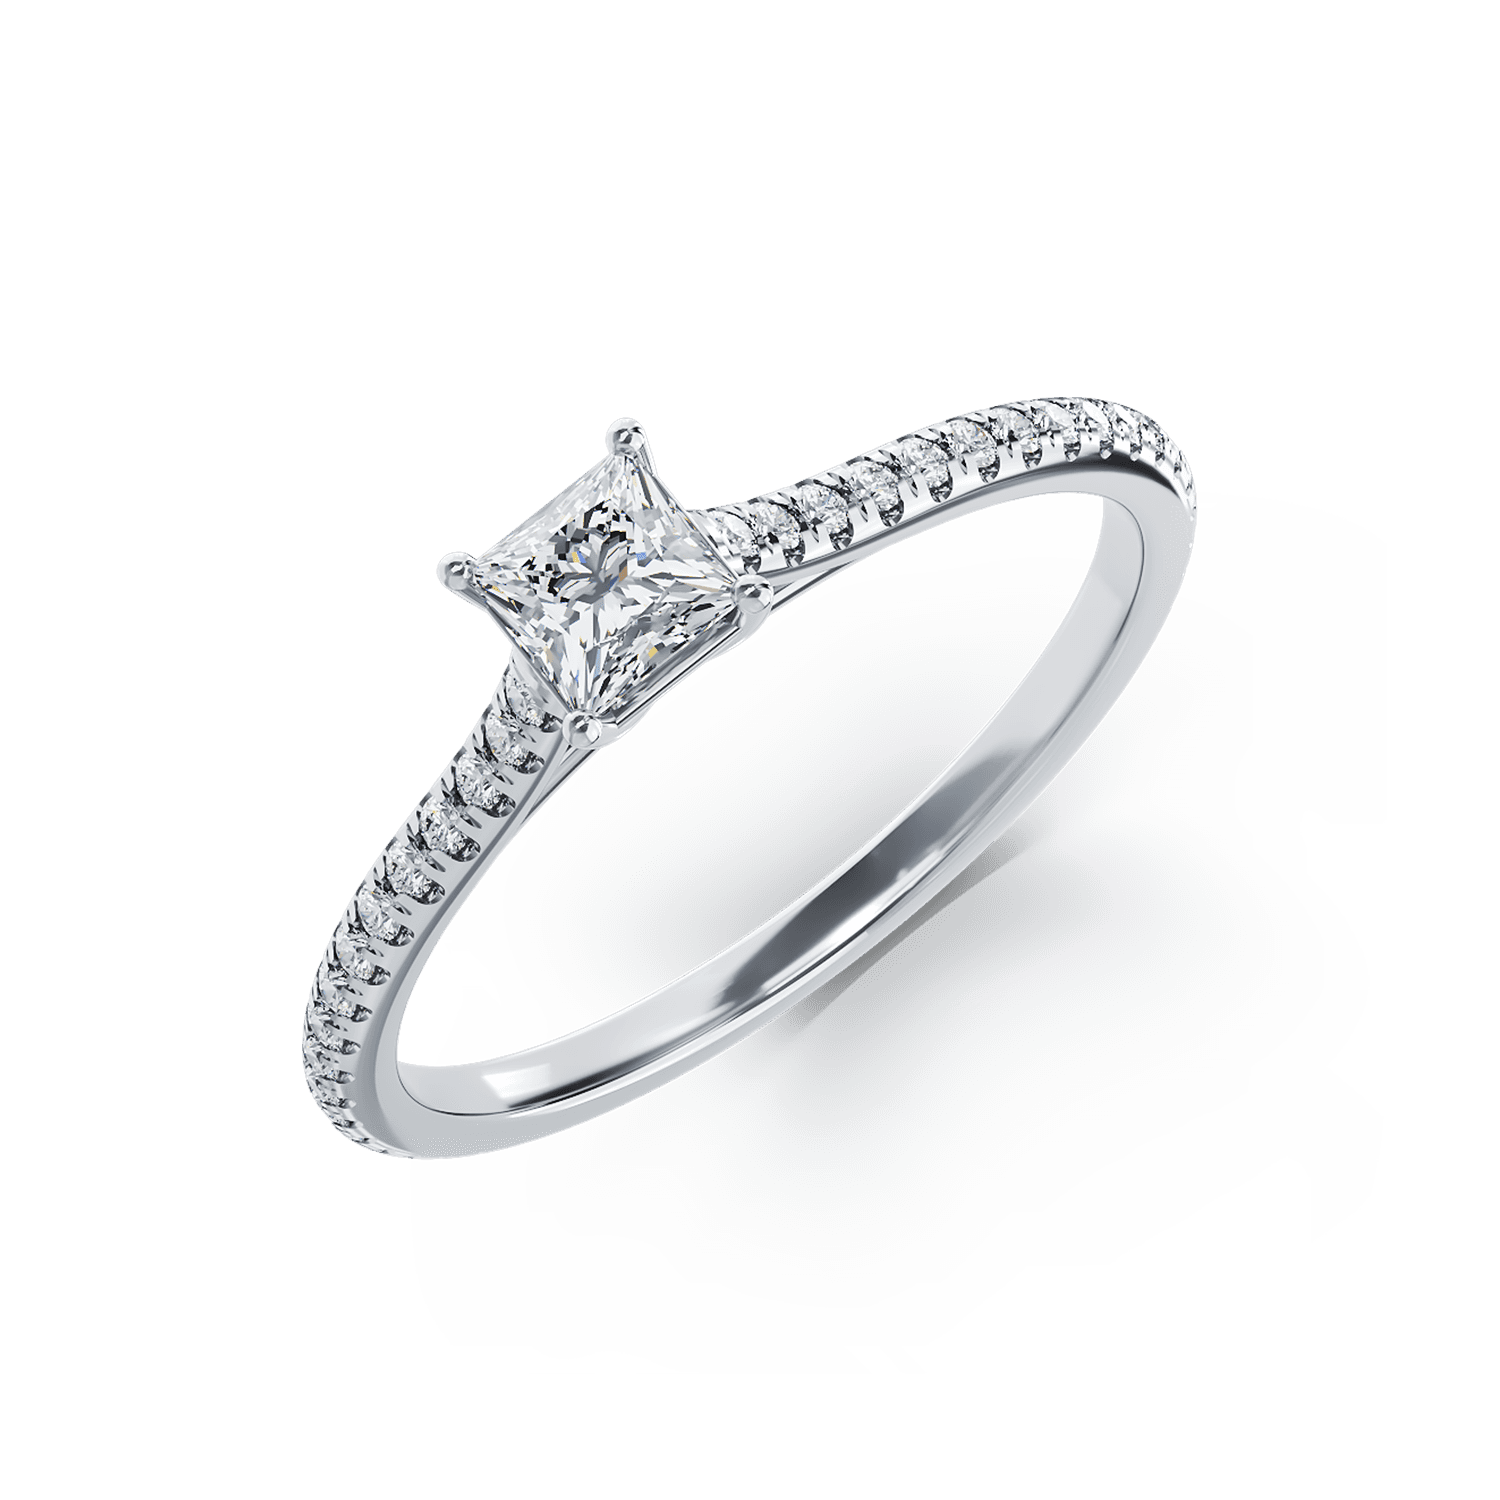 Platinum engagement ring with 0.33ct diamond and 0.155ct diamonds